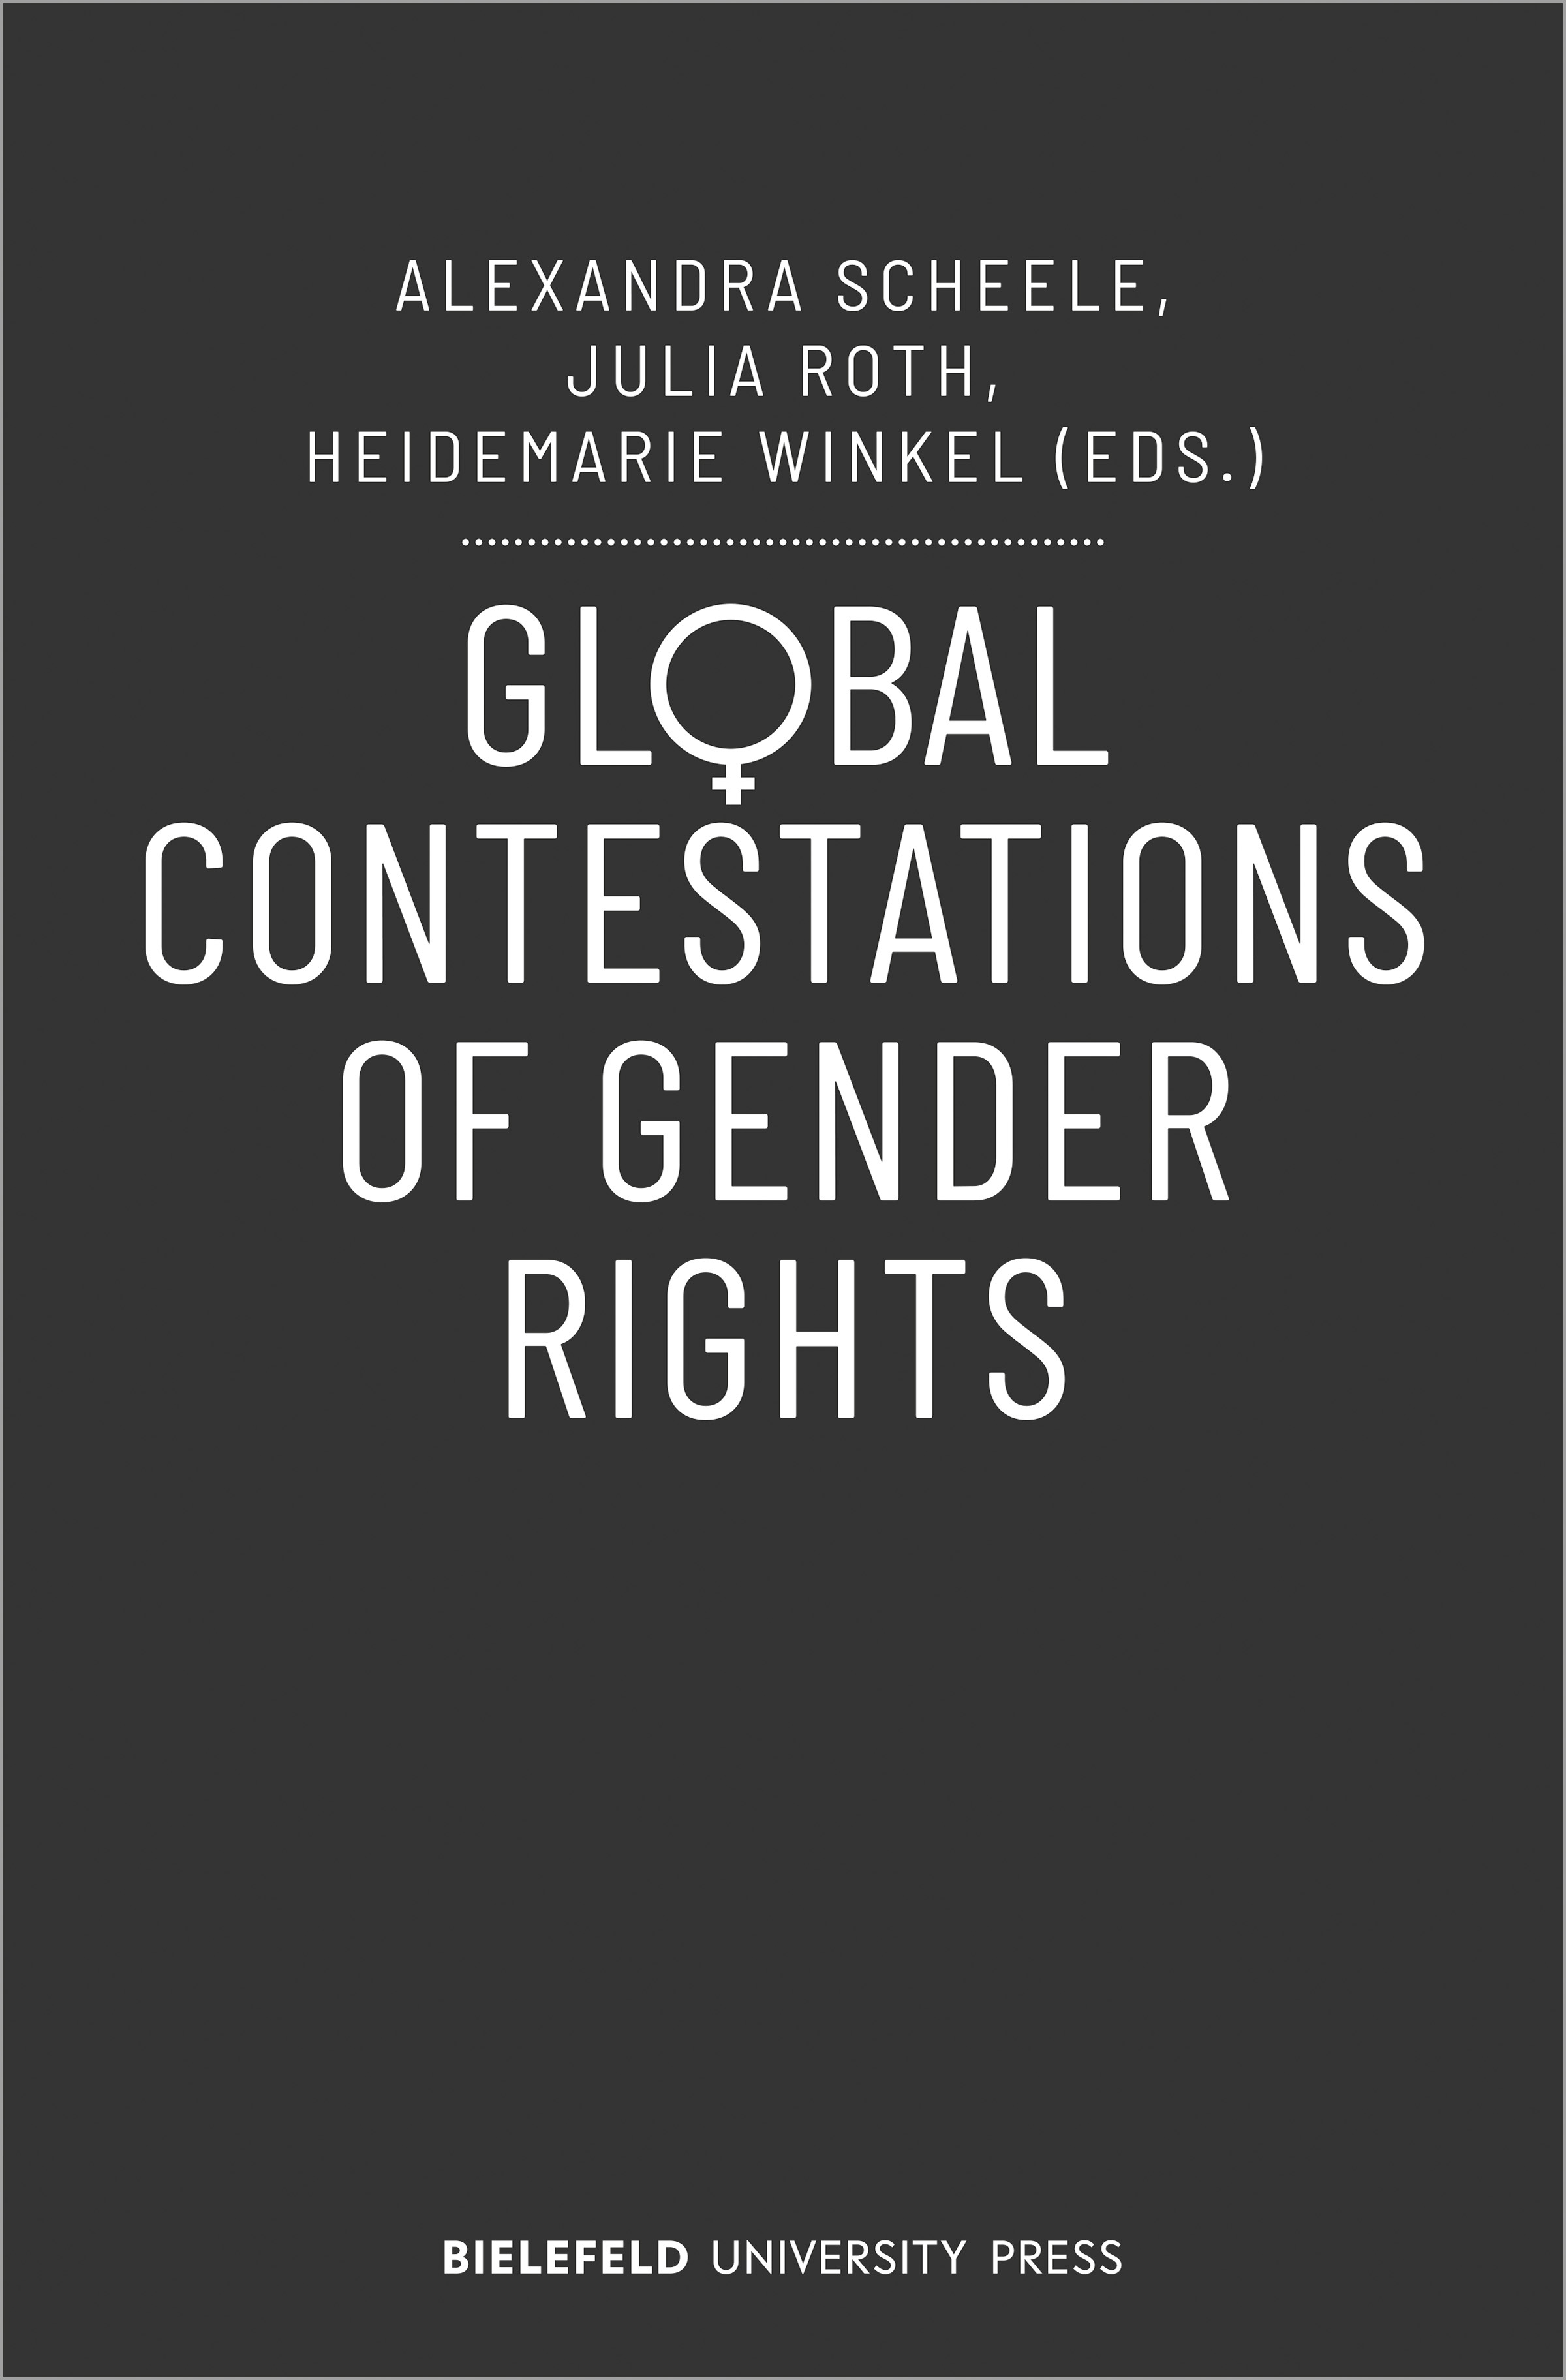 Schwarzes Buch-Cover mit weißer Aufschrift: Alexandra Scheele, Julia Roth, Heidemarie Winkel (Eds.) Global Contestations of Gender Rights. Bielefeld University Press